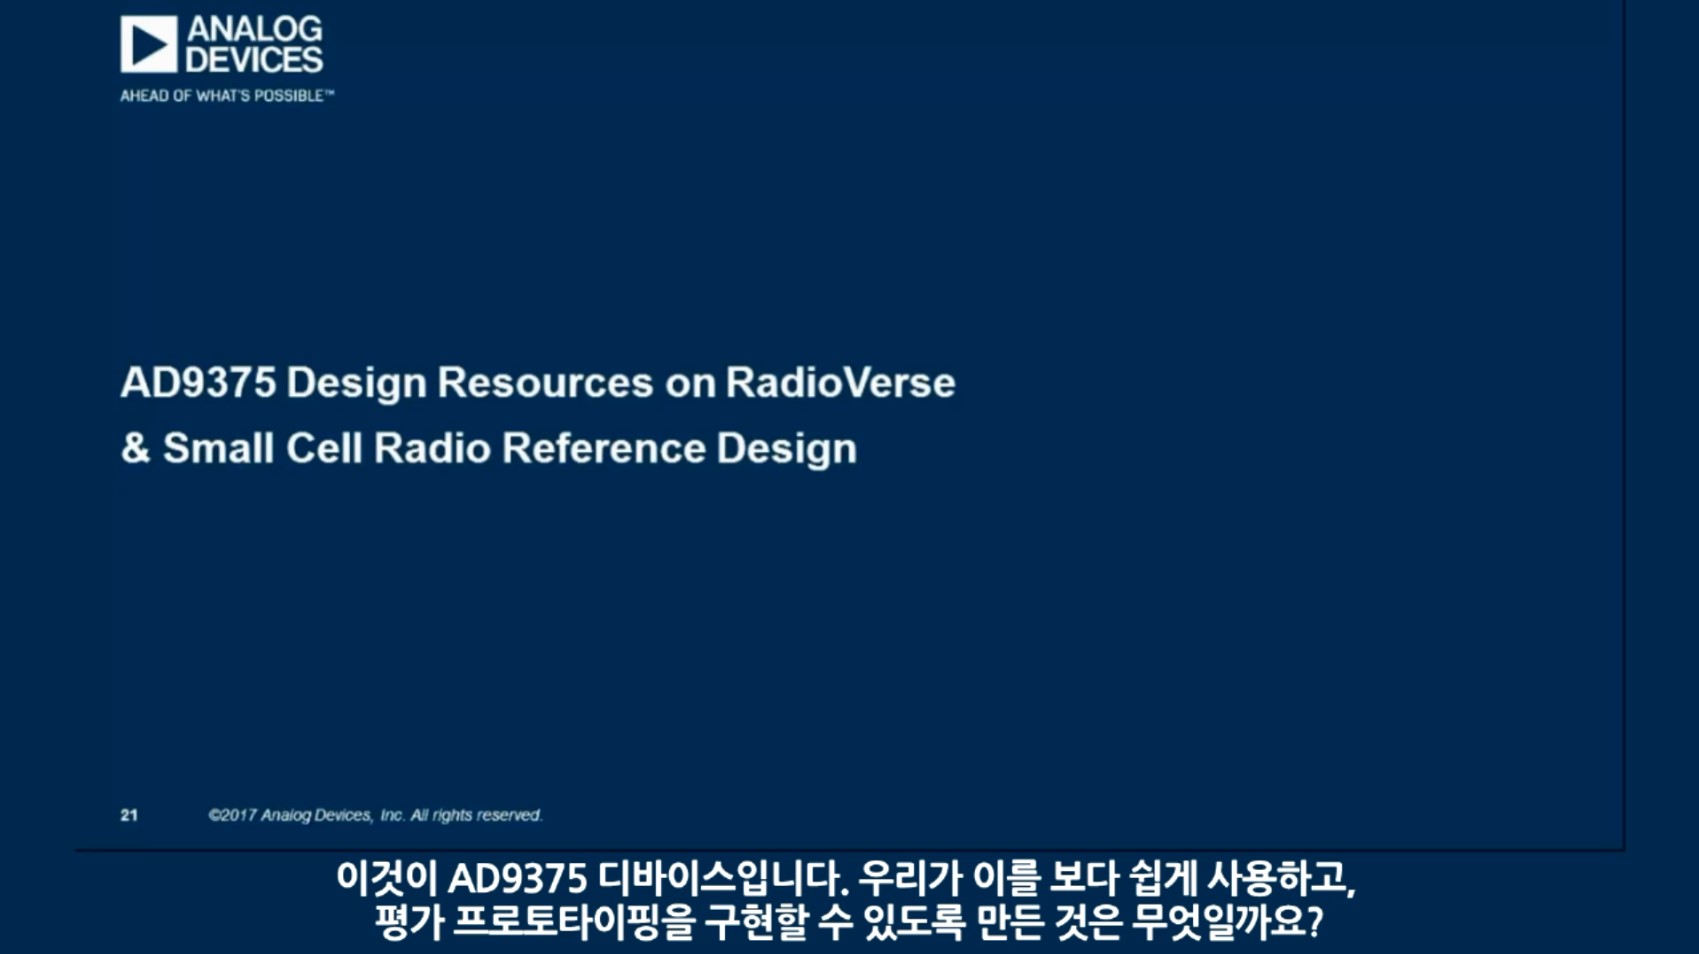 RadioVerse의 AD9375 디자인 리소스 & Small Cell 라디오 레퍼런스 디자인